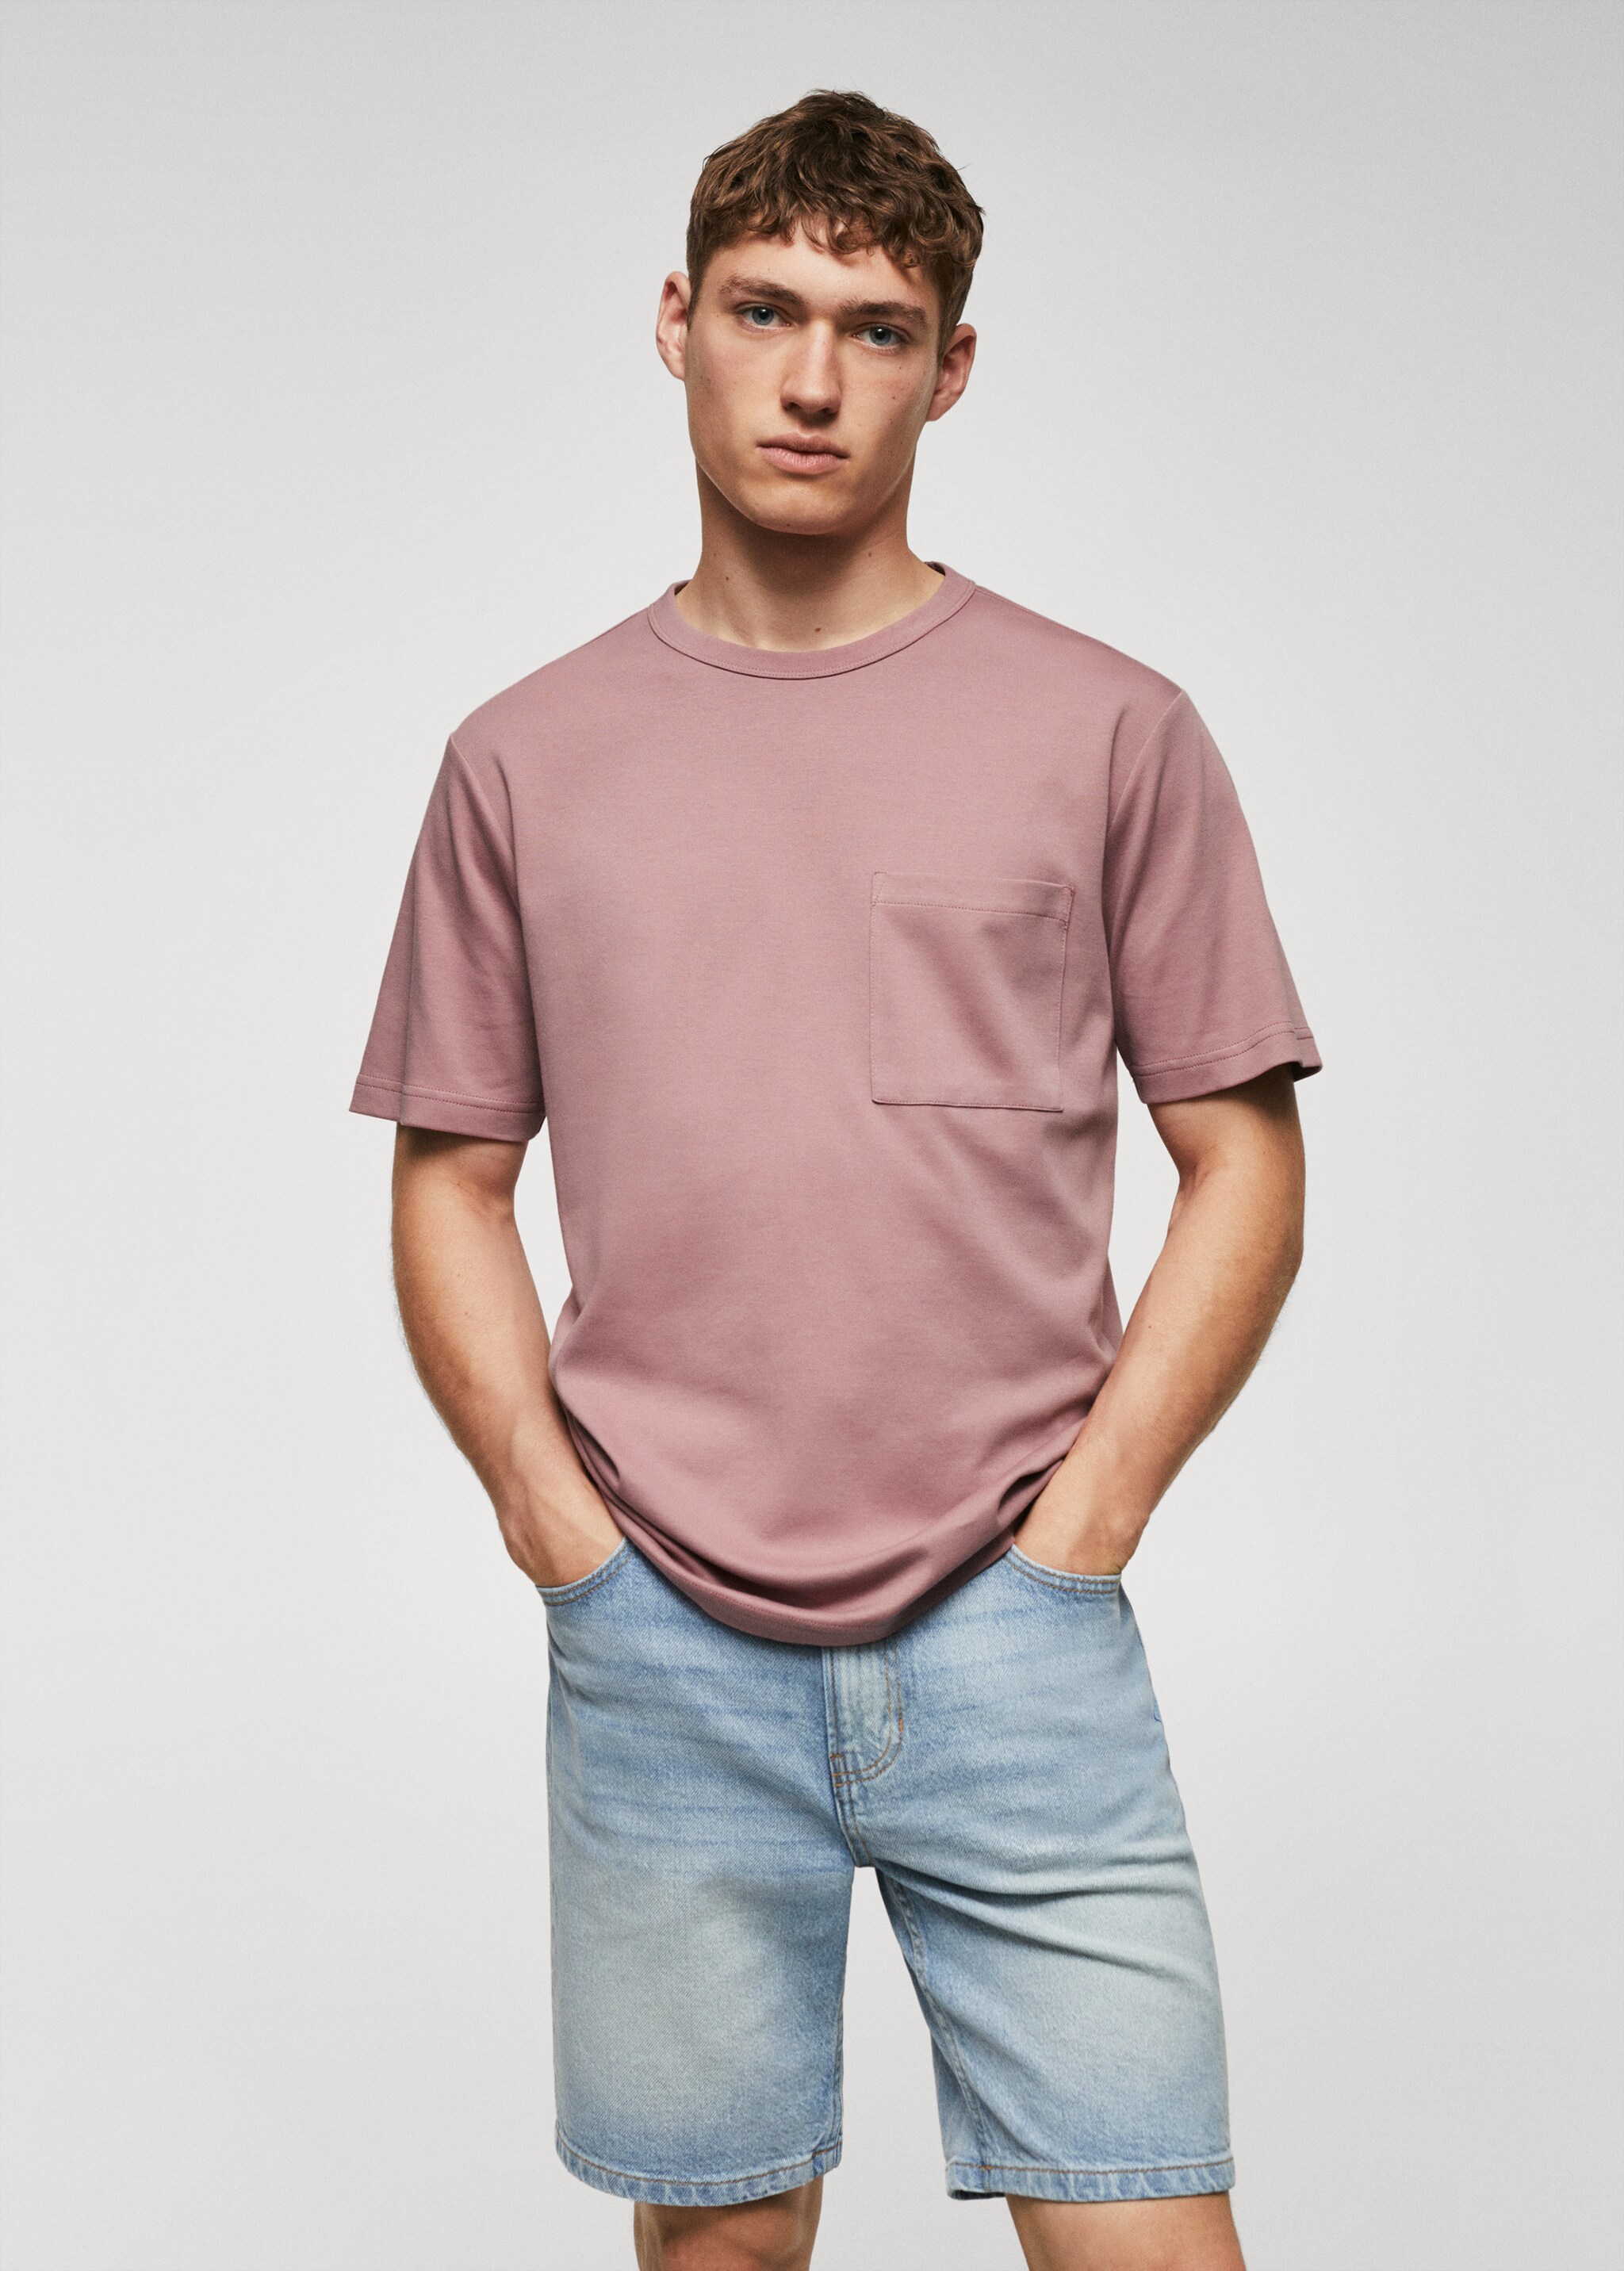 100% cotton t-shirt with pocket - Medium plane